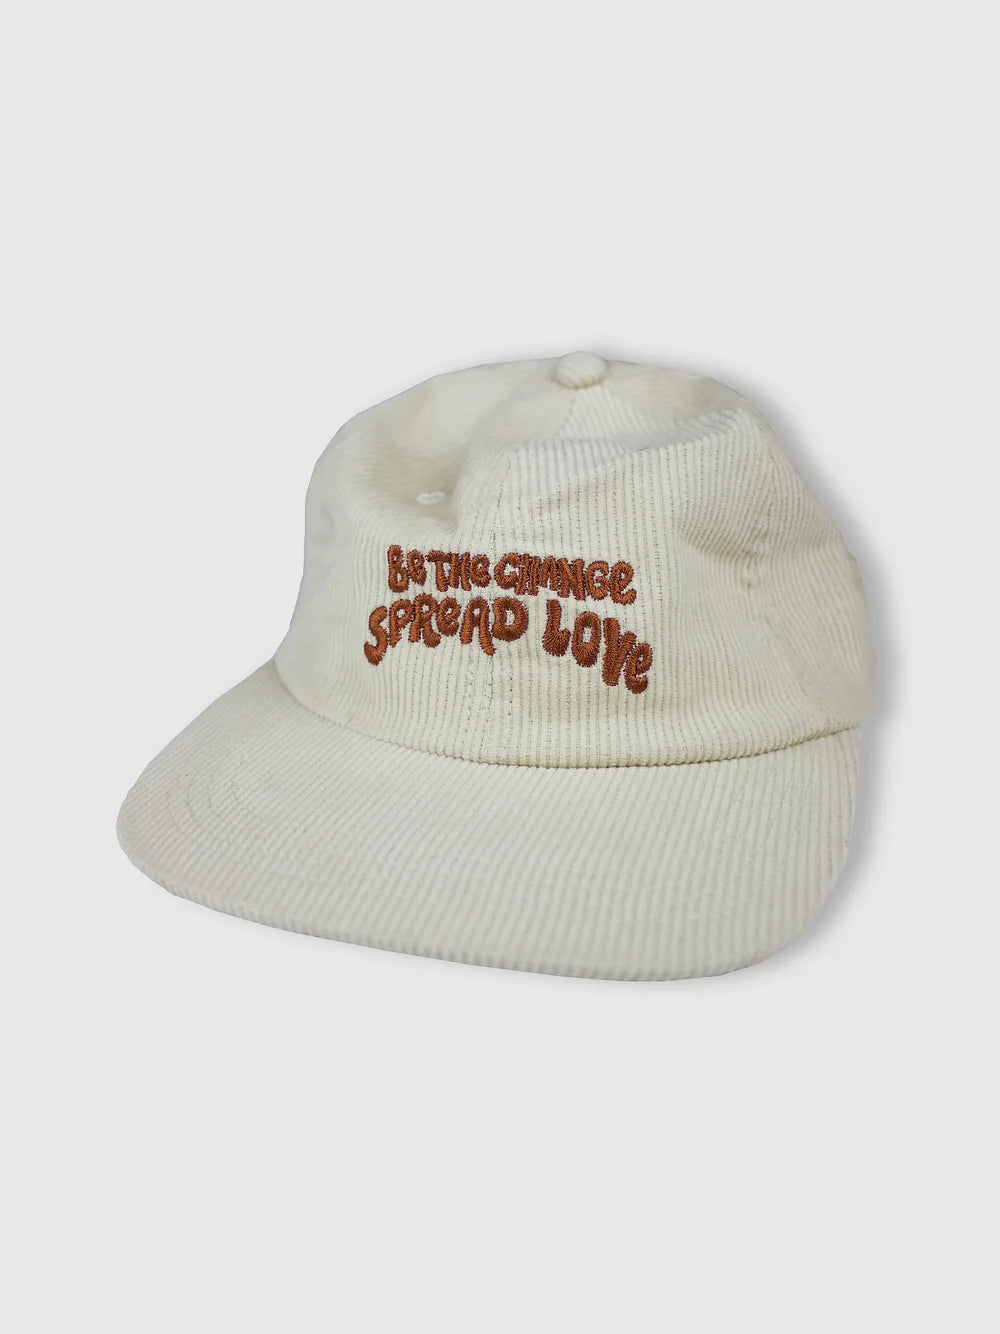 Spread Love Hat